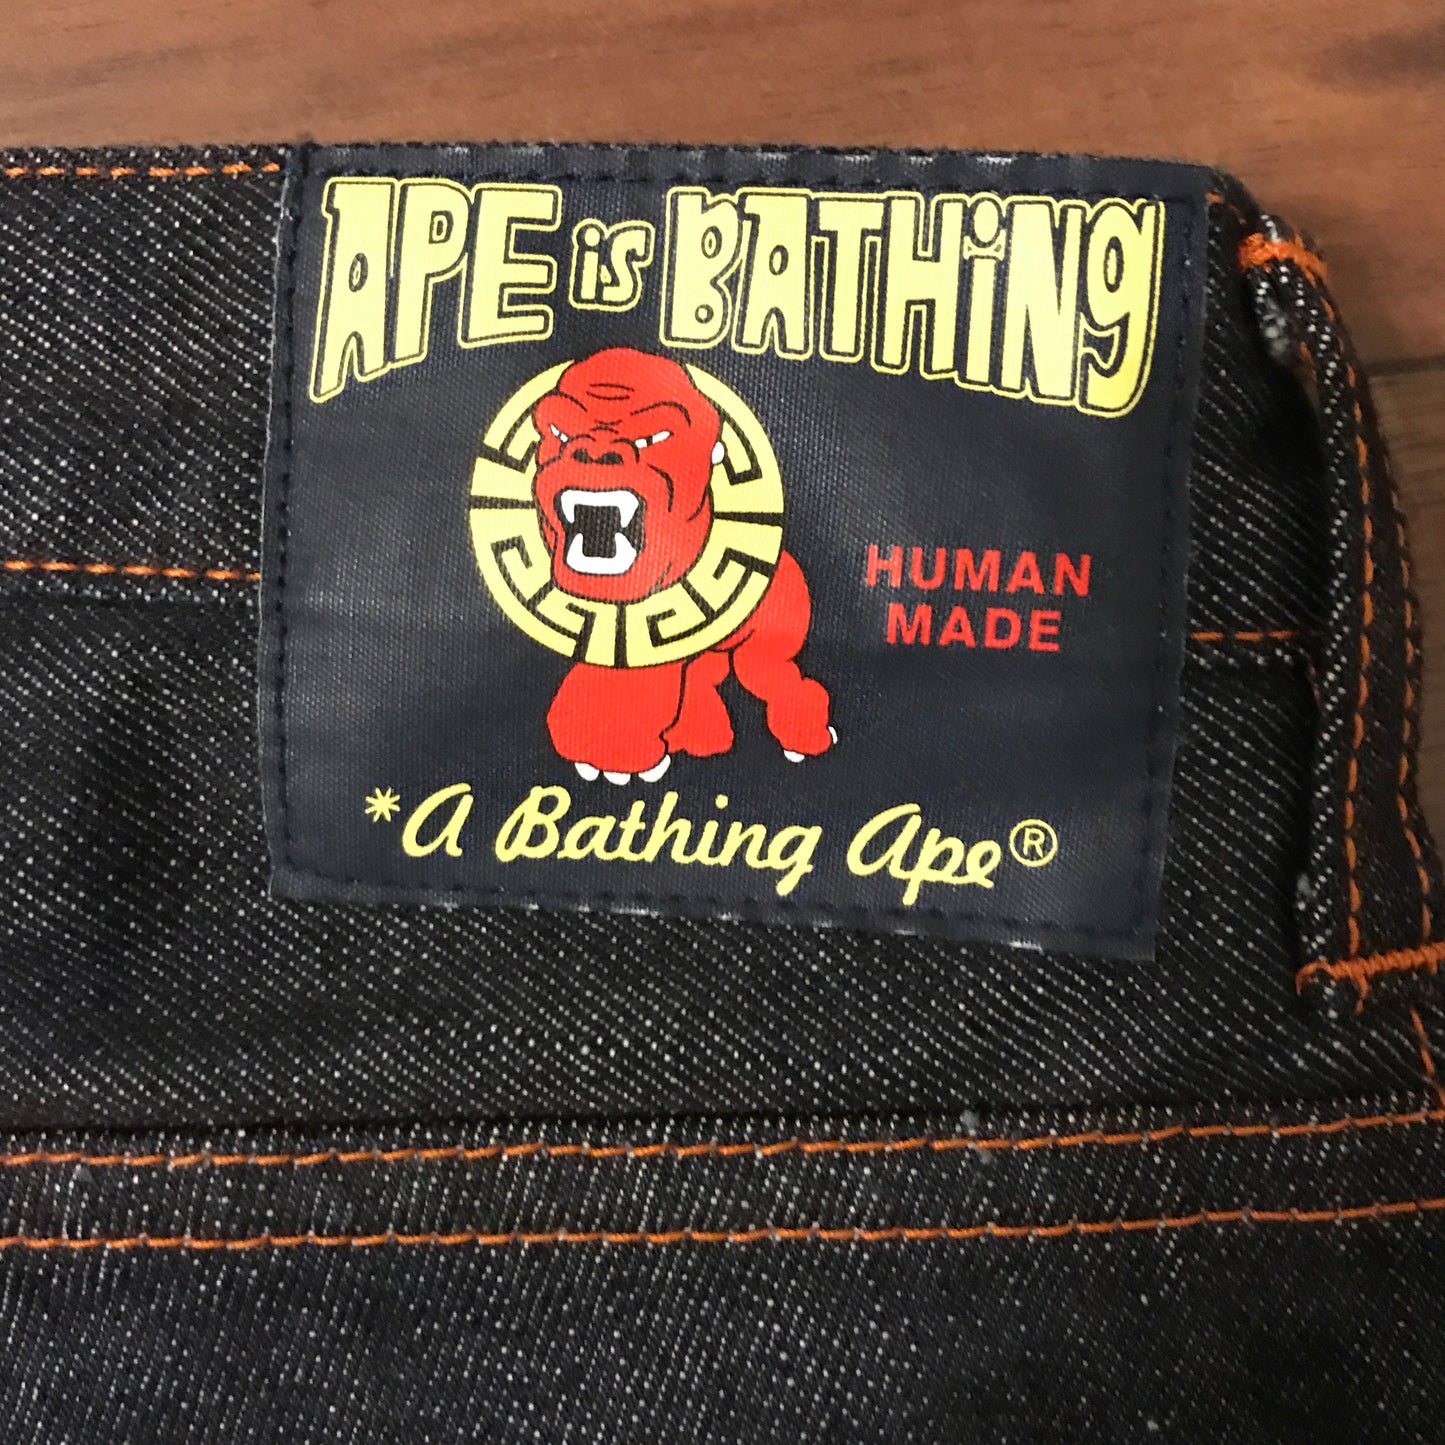 A Bathing Ape Human Made Selvedge Denim Jeans